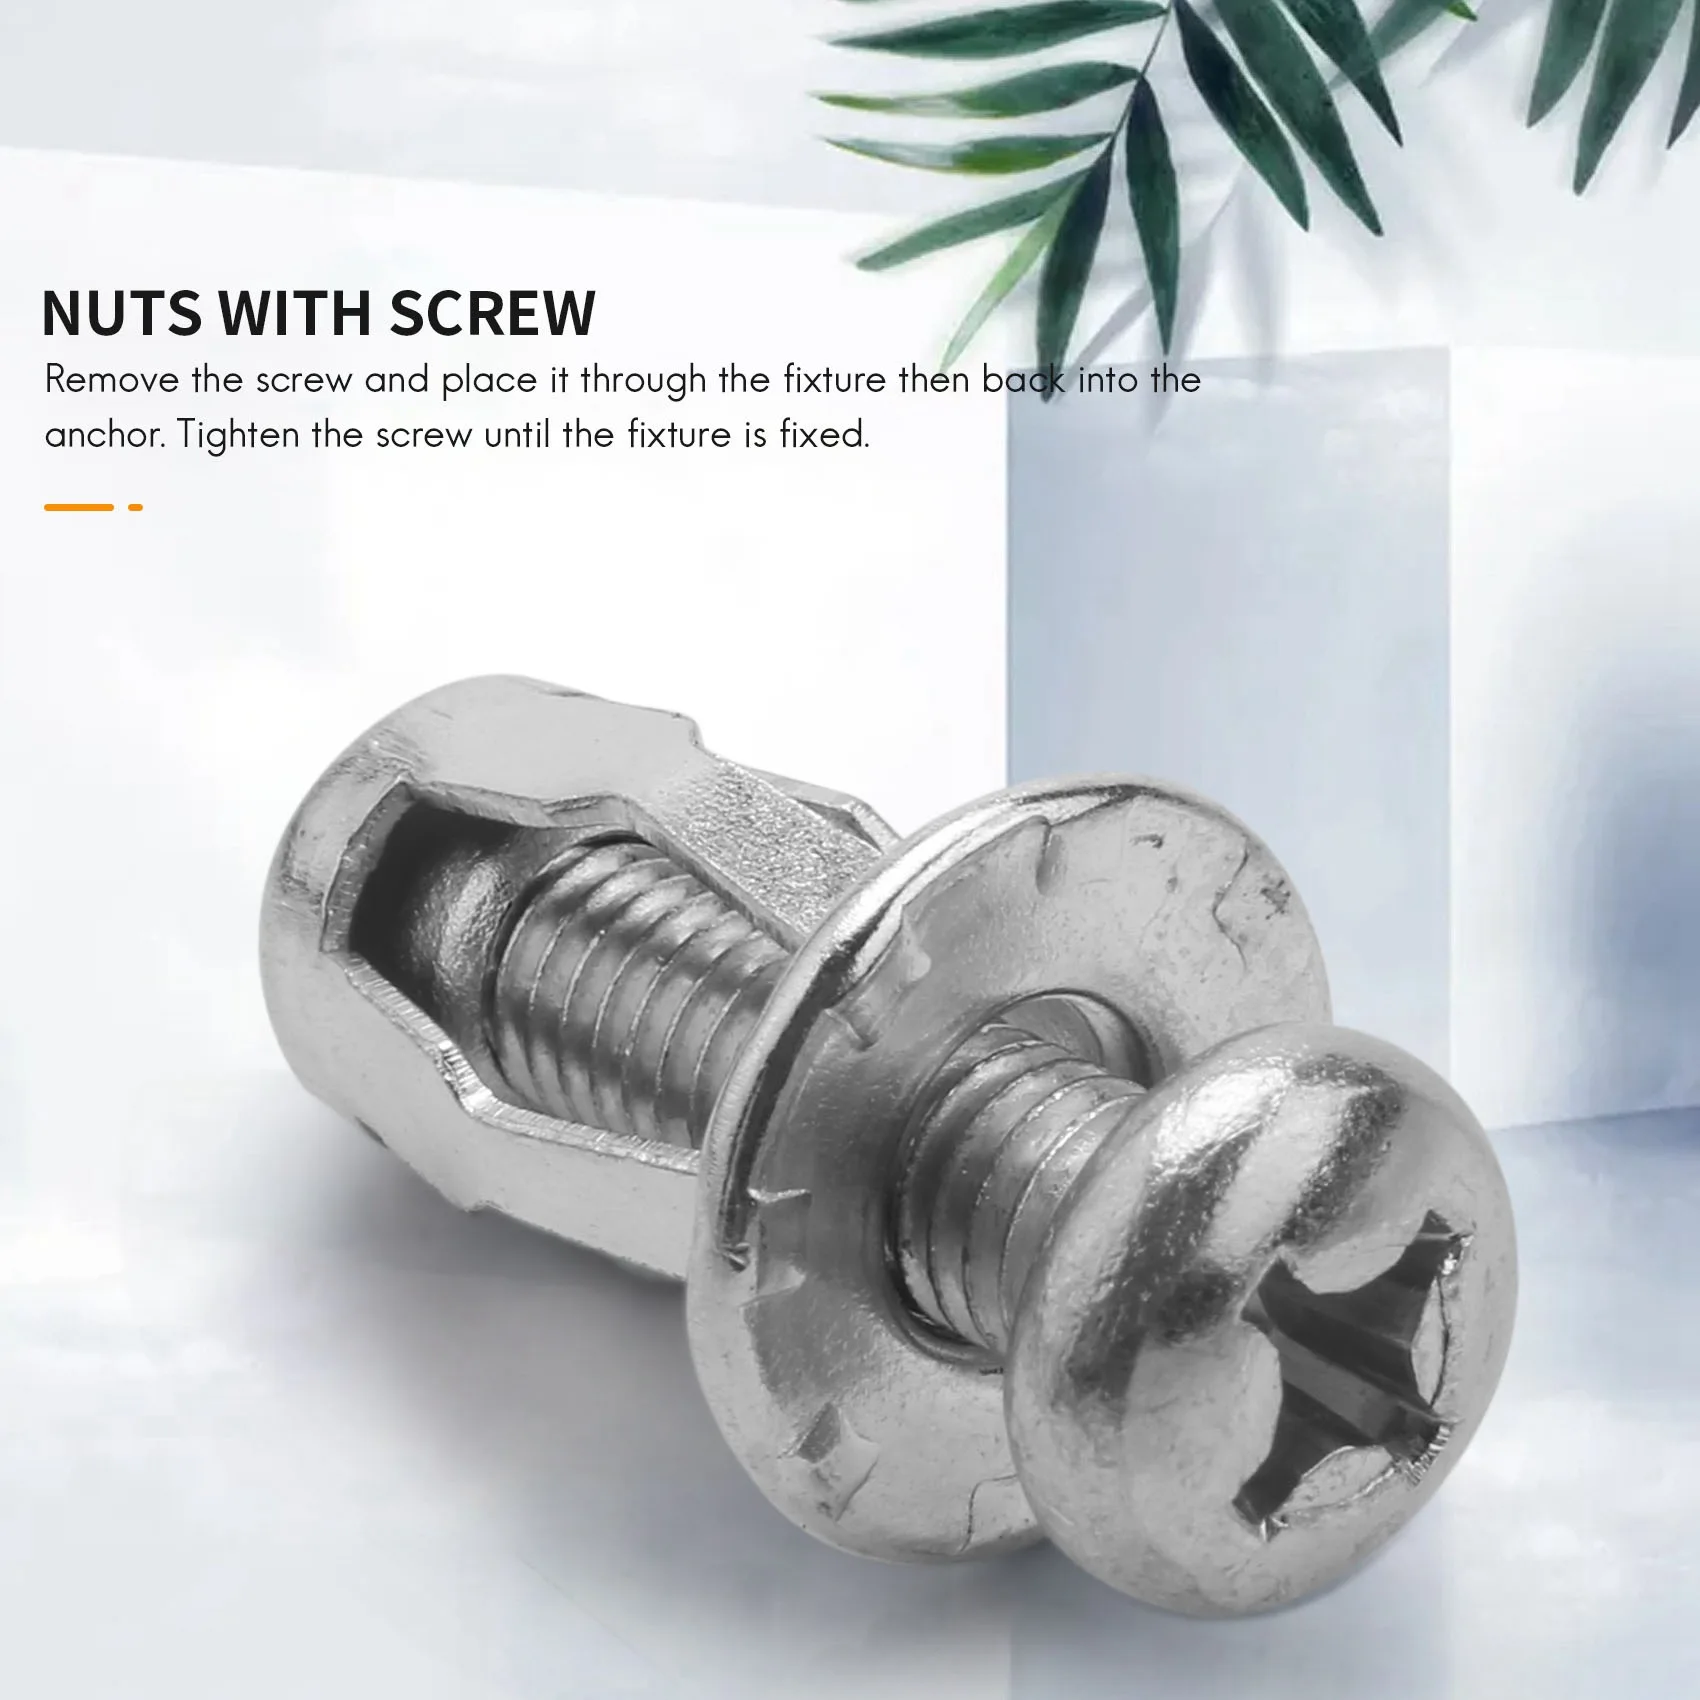 

20 Pcs M6x25 Jack Nuts Car Metal Screw Petal Nuts with Screw for Hollow Wall Iron Skin